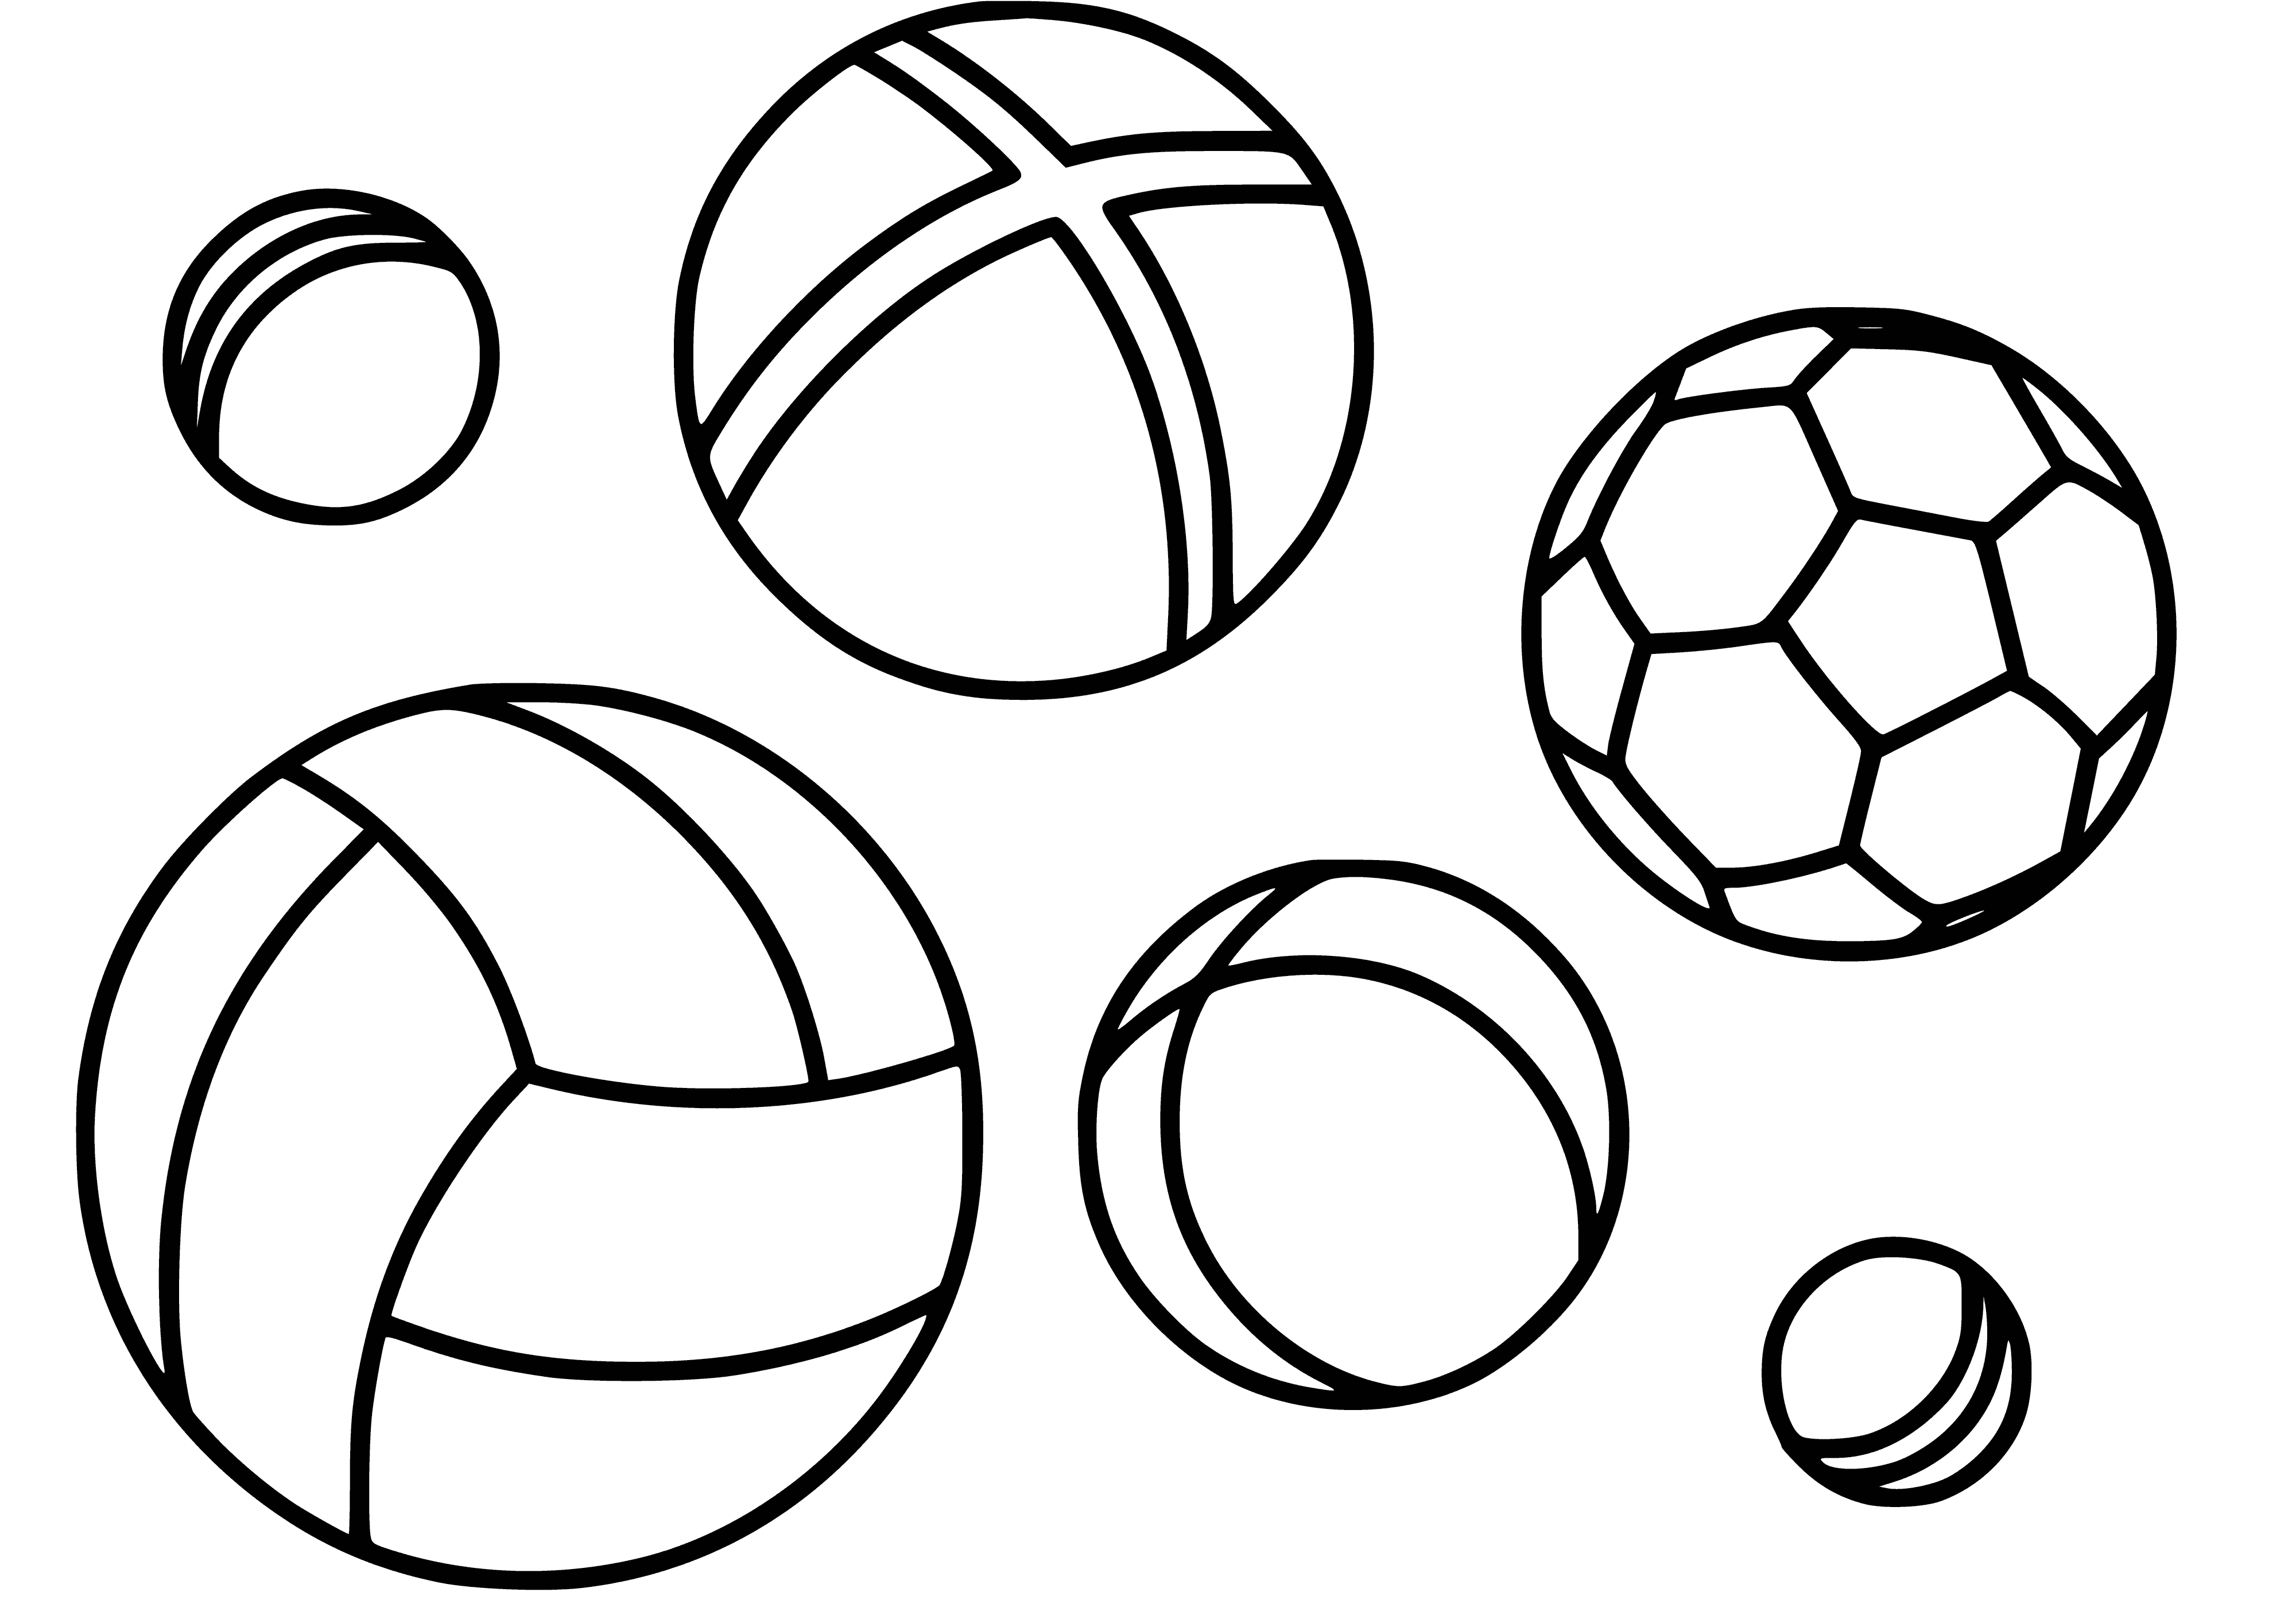 Balls coloring page